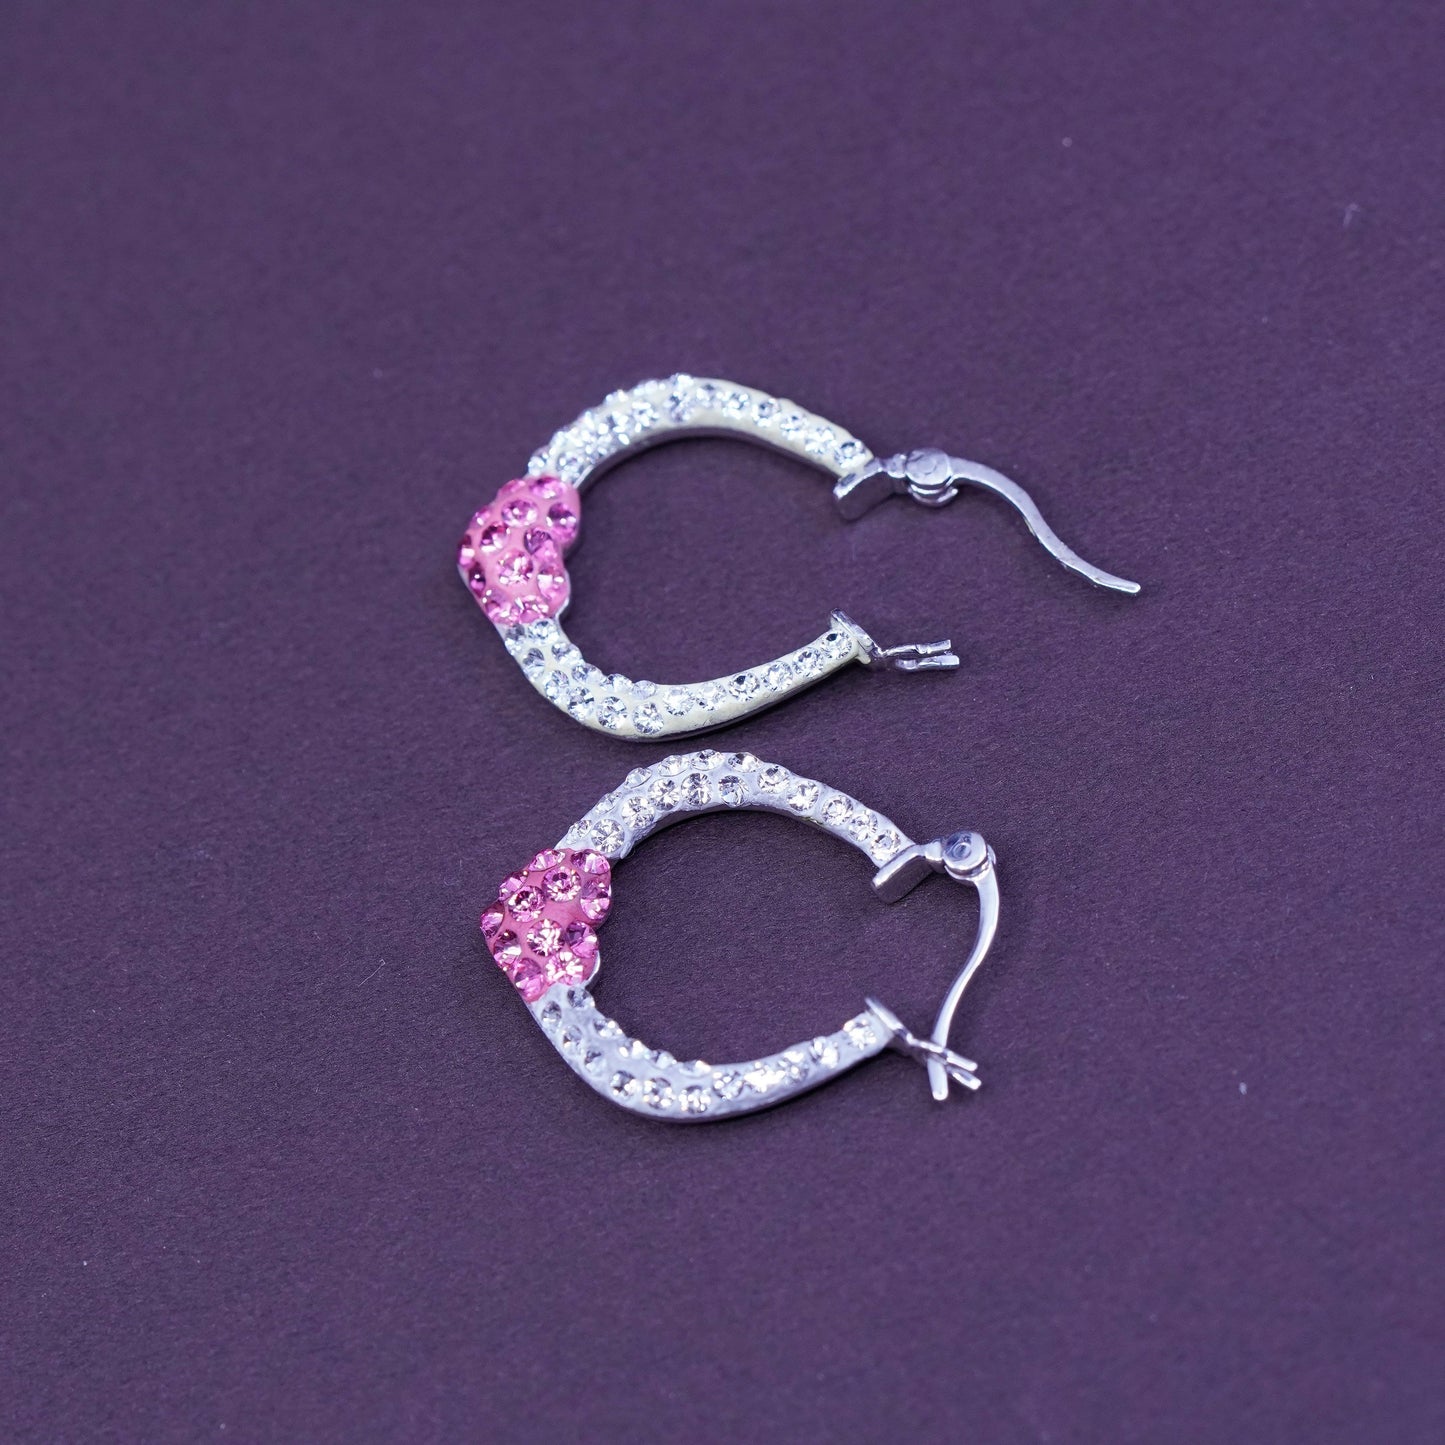 1”, AU Sterling silver handmade earrings, 925 heart hoops with cluster Crystal